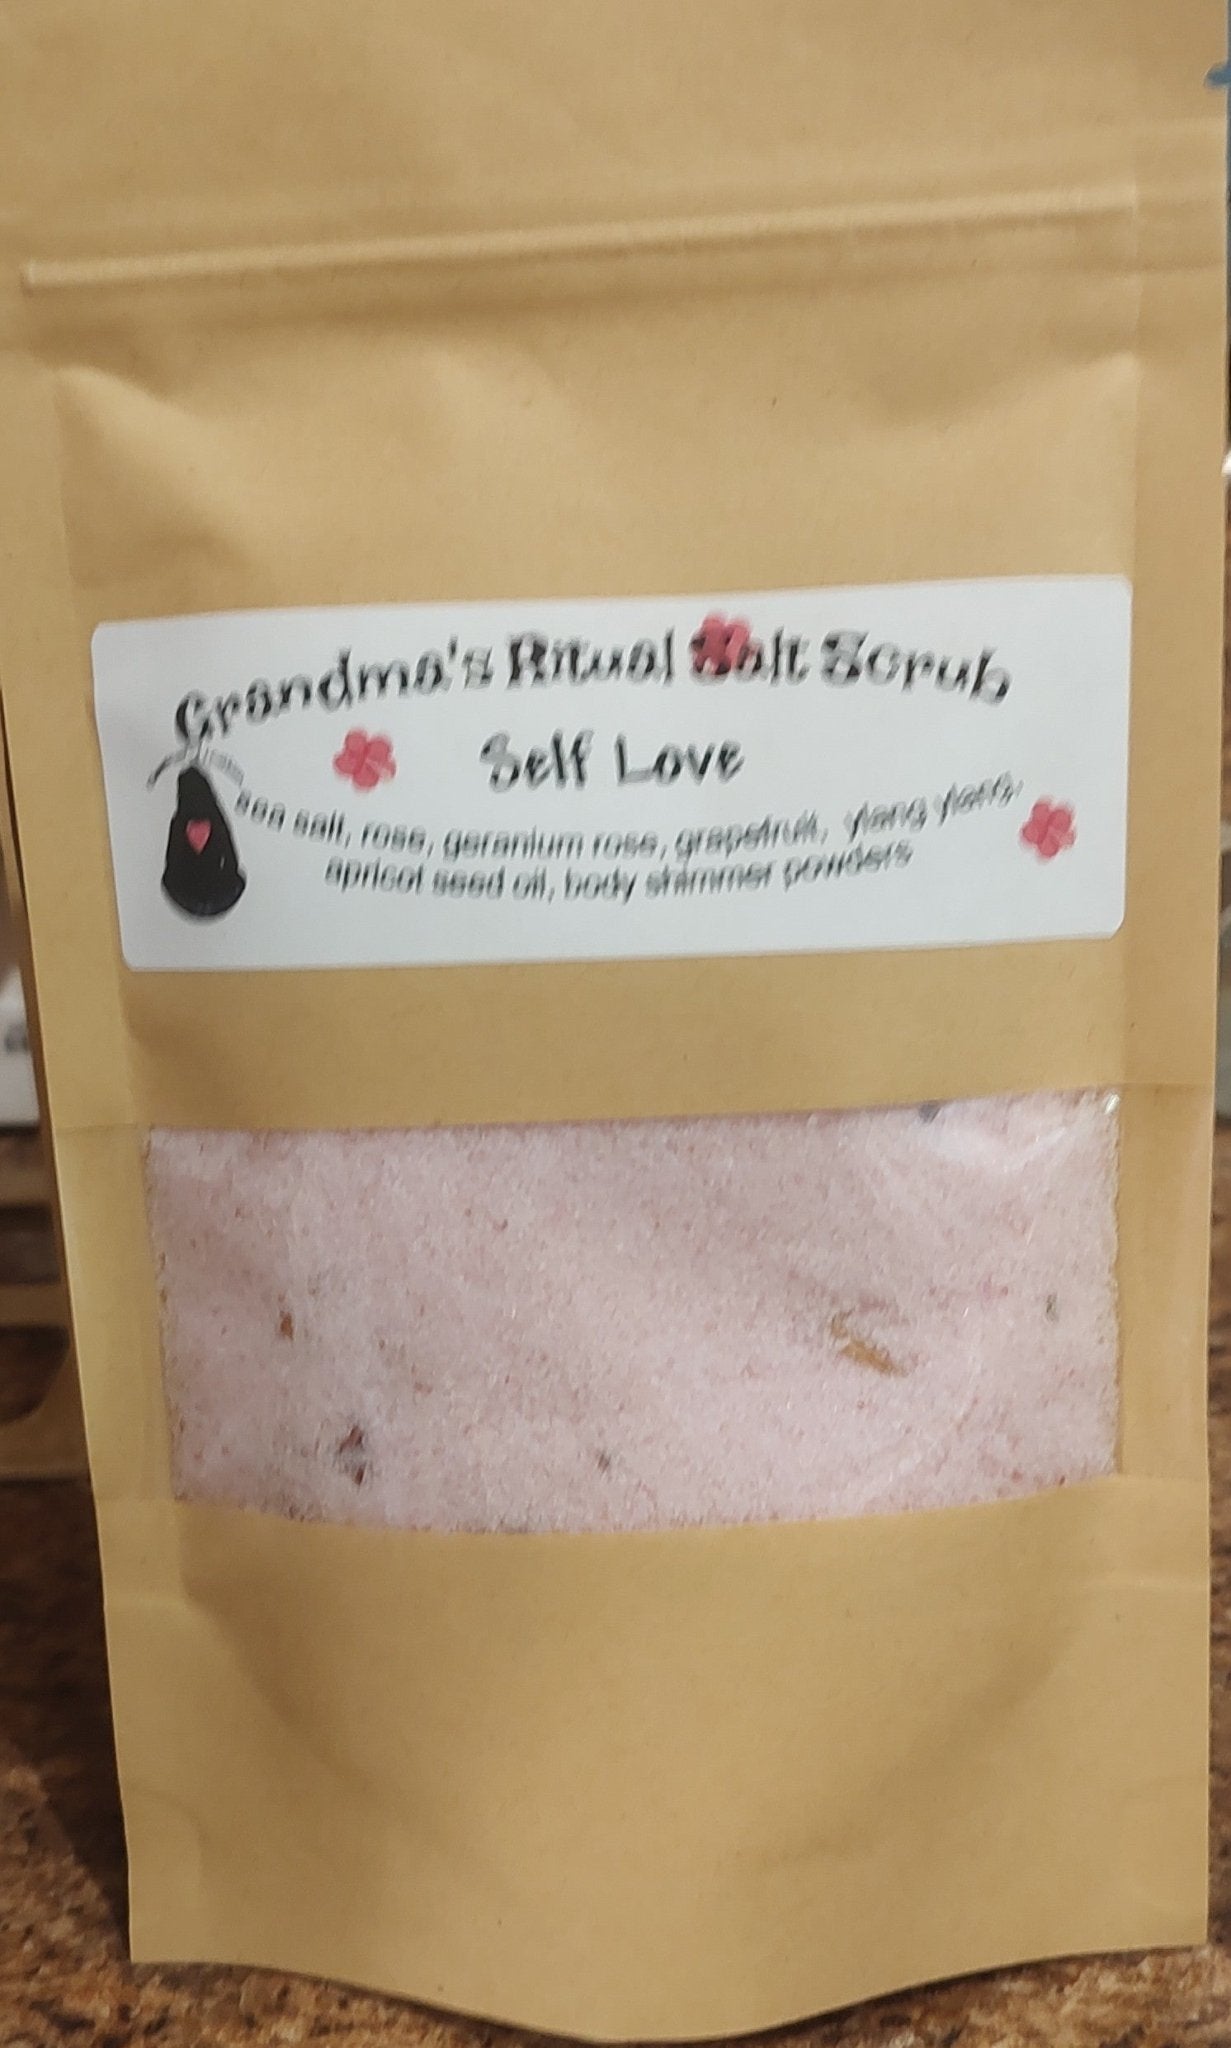 Grandma's Ritual Salt Scrub | Self Love and Nourishment - Spiral Circle